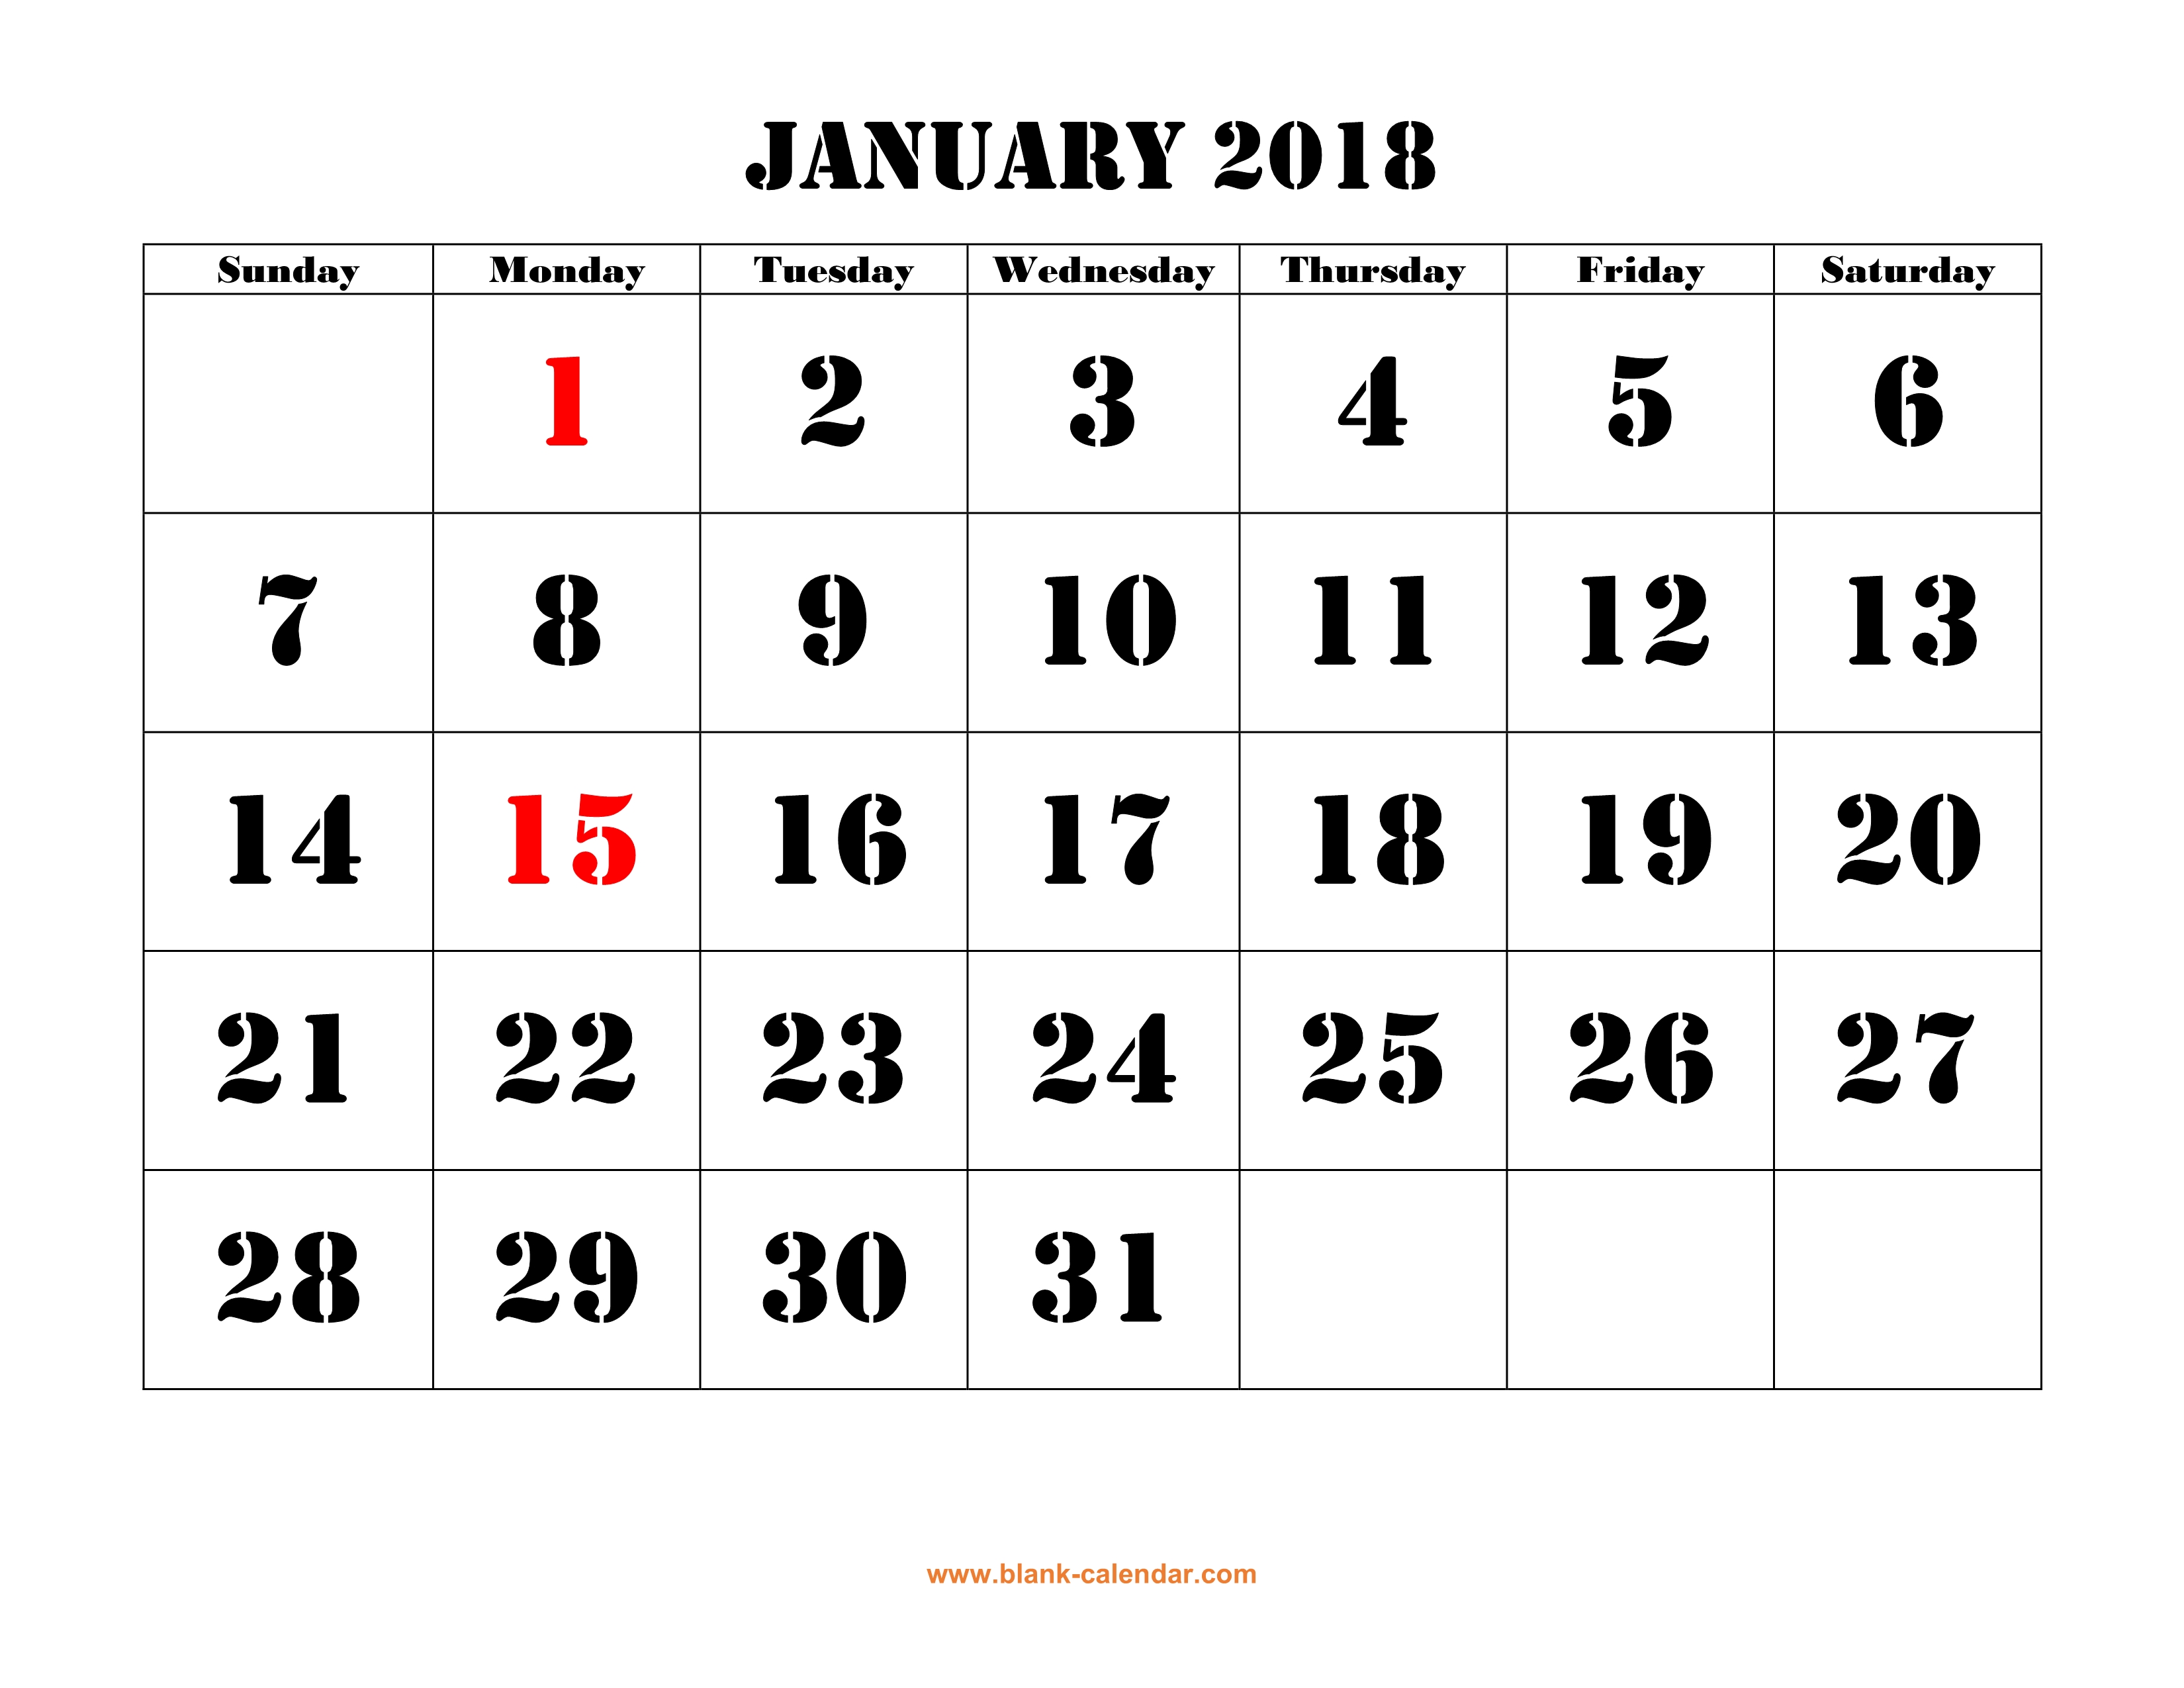 January 2018 Calendar Pdf